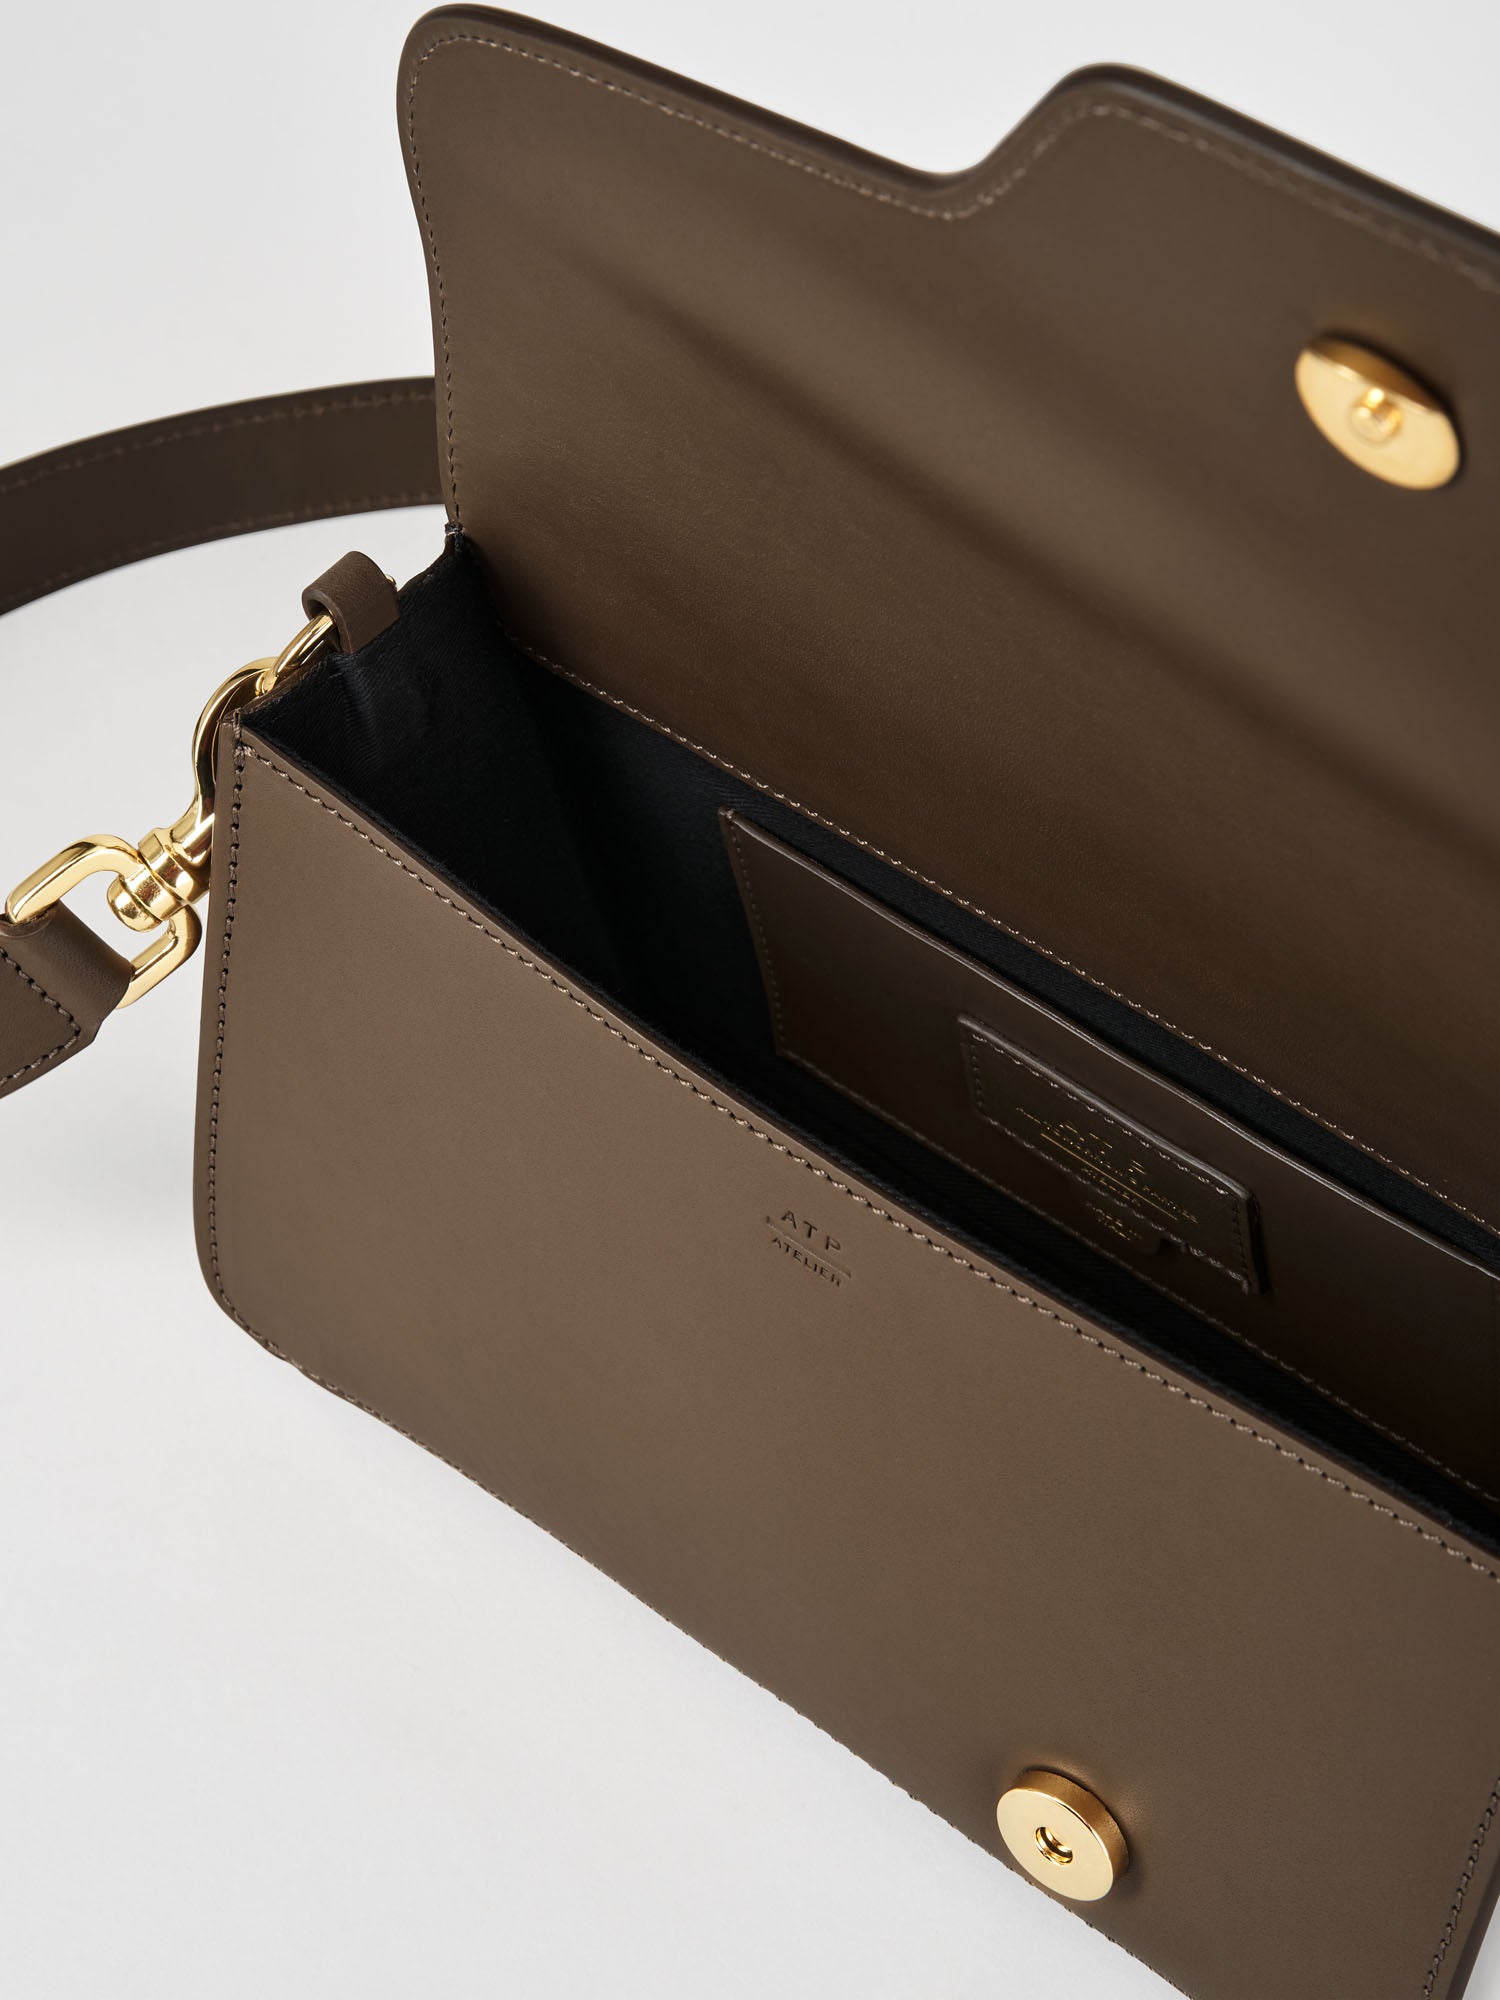 Assisi Khaki Brown Leather Shoulder Bag